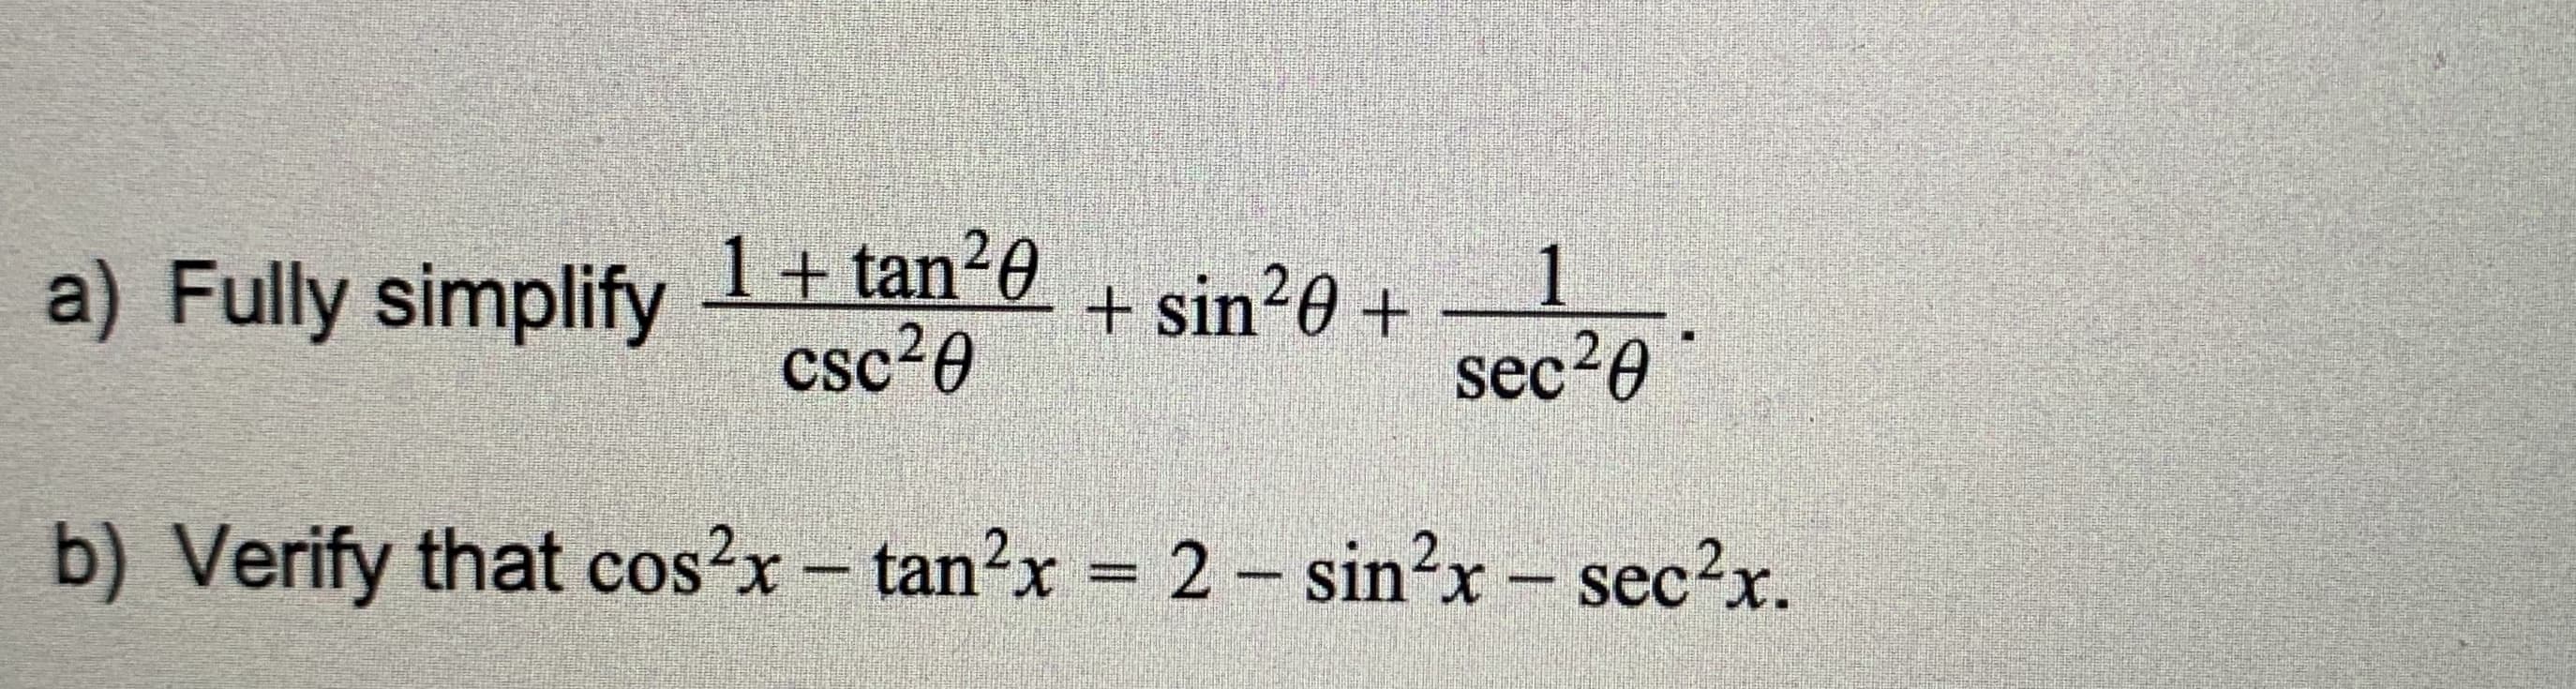 cos?x- tan2x = 2 – sin?x - sec?x.
